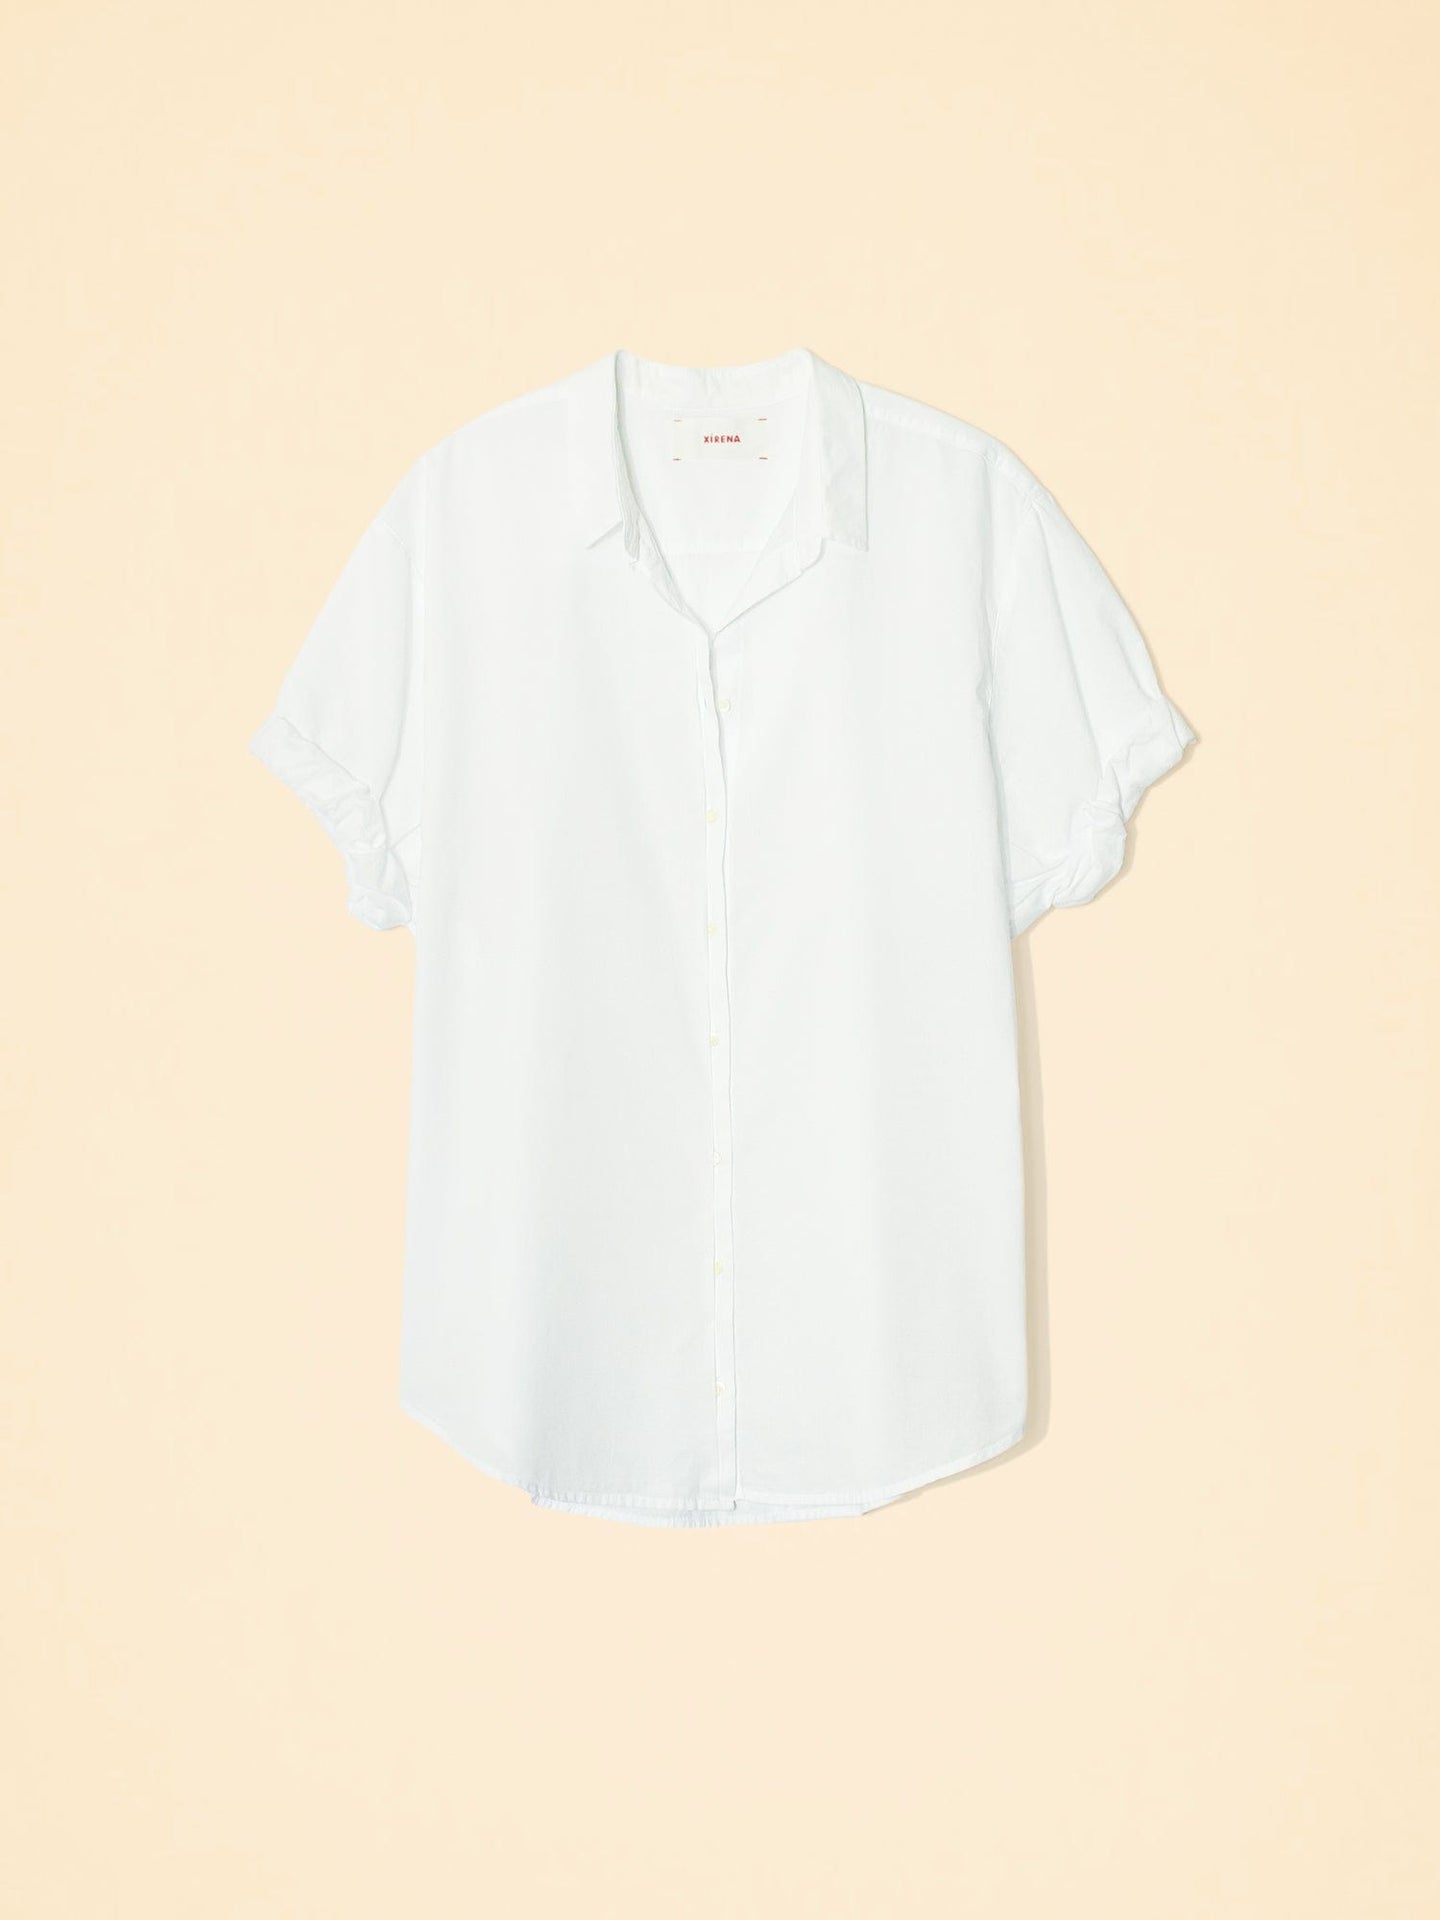 Xirena Shirt White Channing Shirt